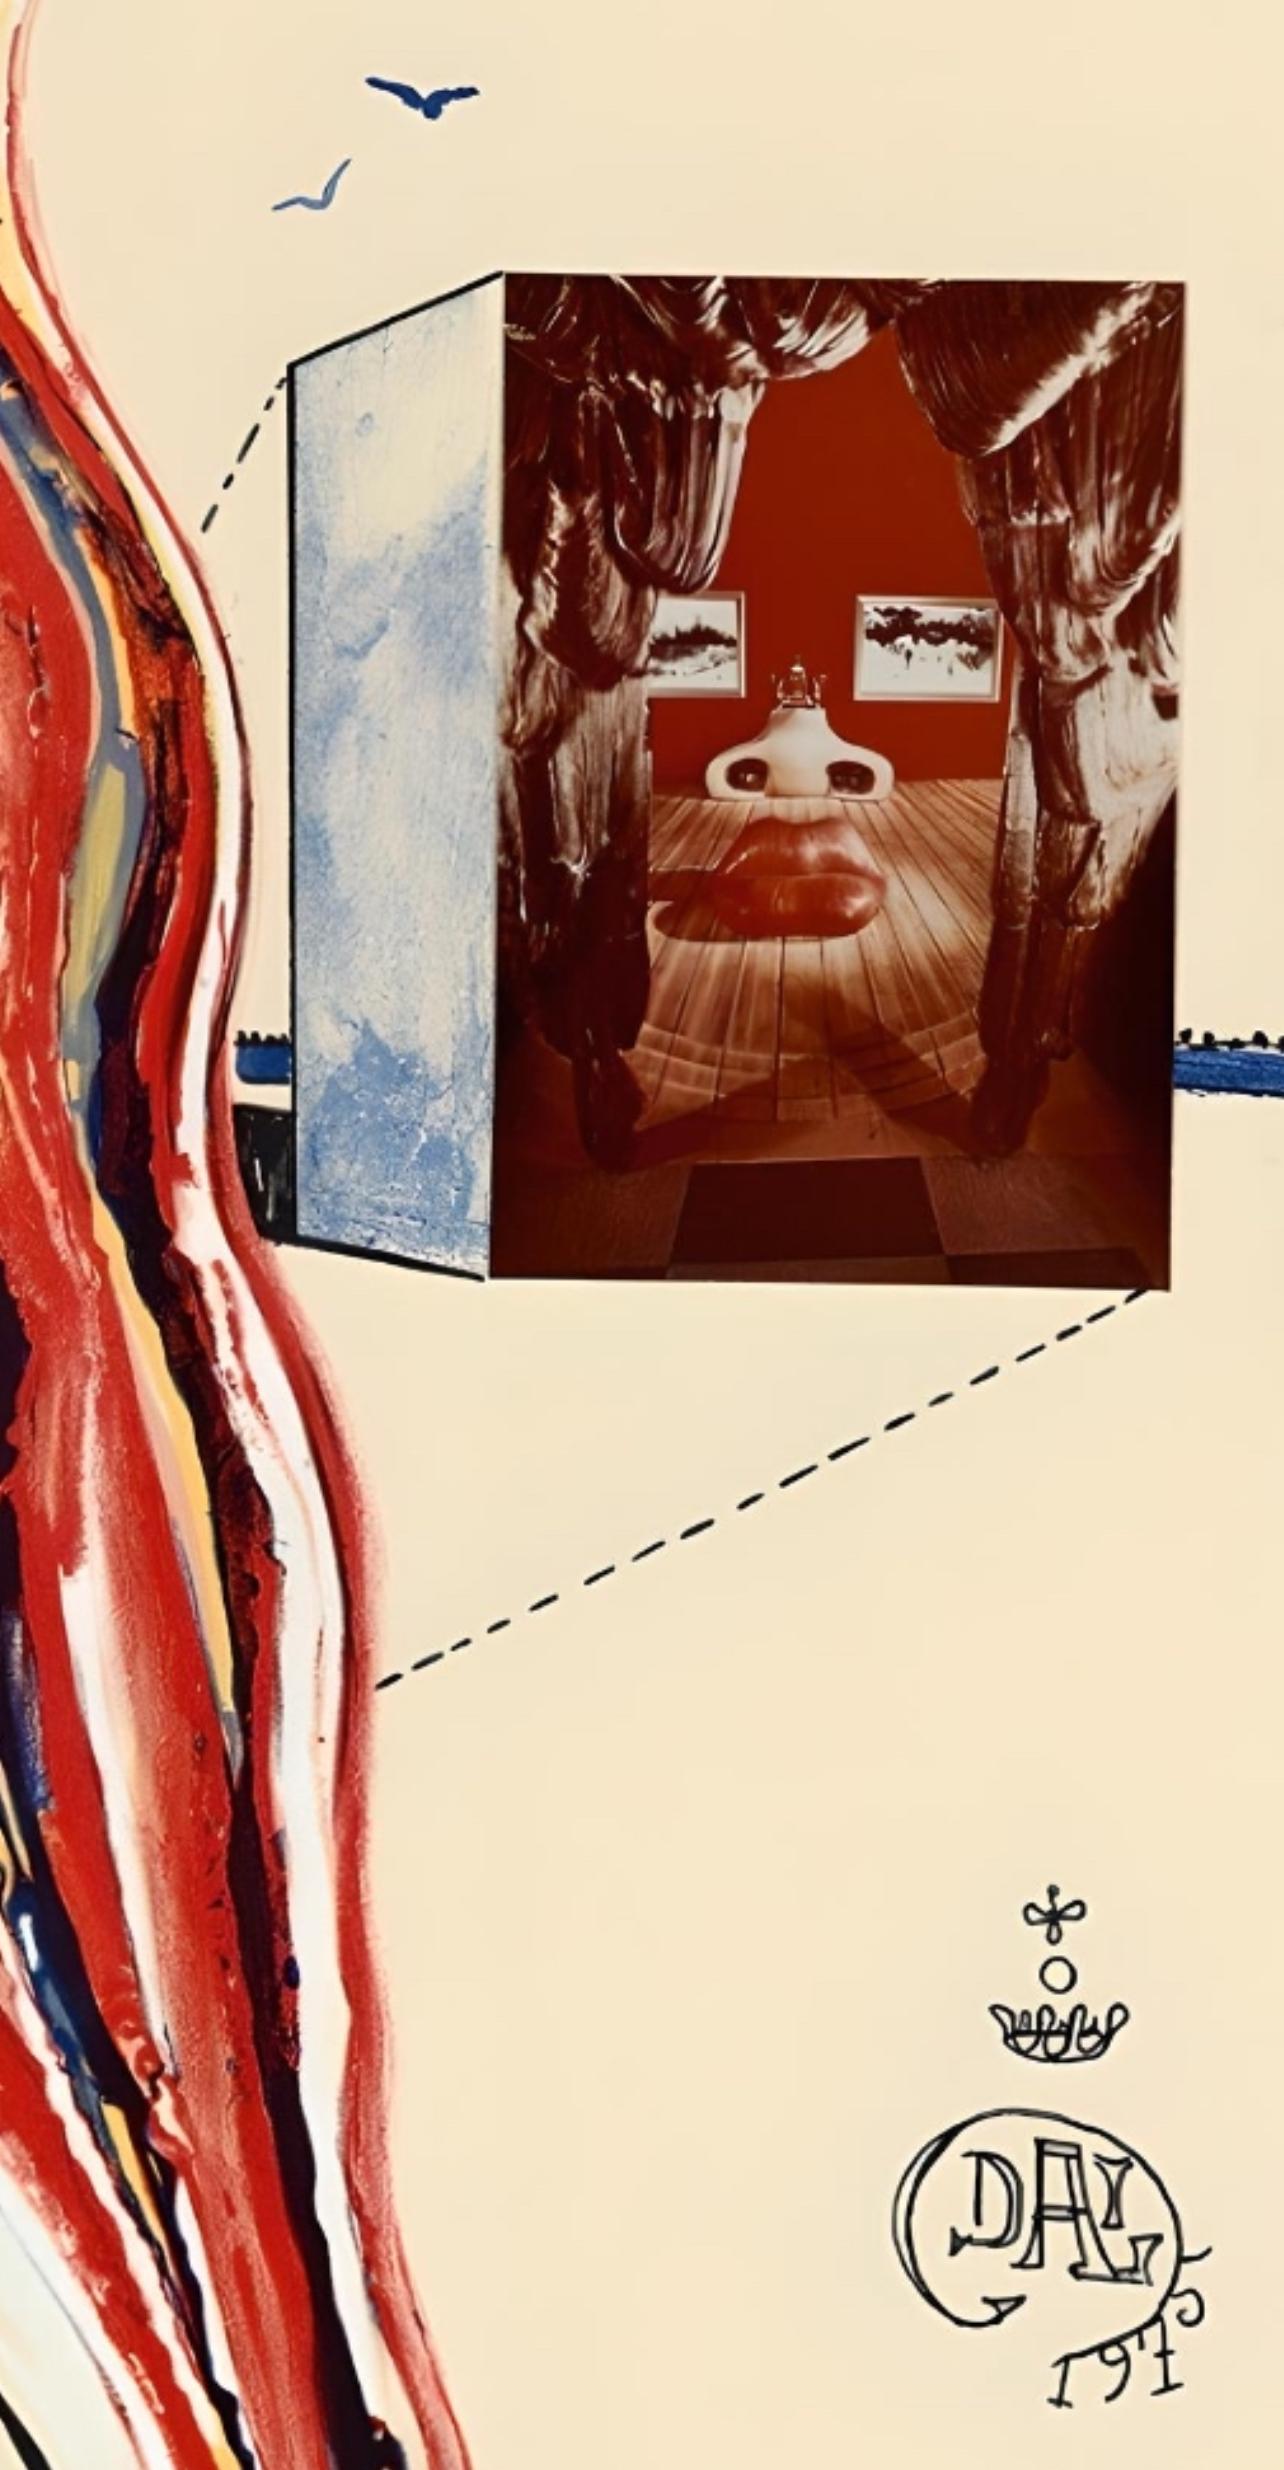 Liquid and Gaseous Television (Michler/Löpsinger 824; Field 75-11C), S. Dali - Surrealist Print by Salvador Dalí